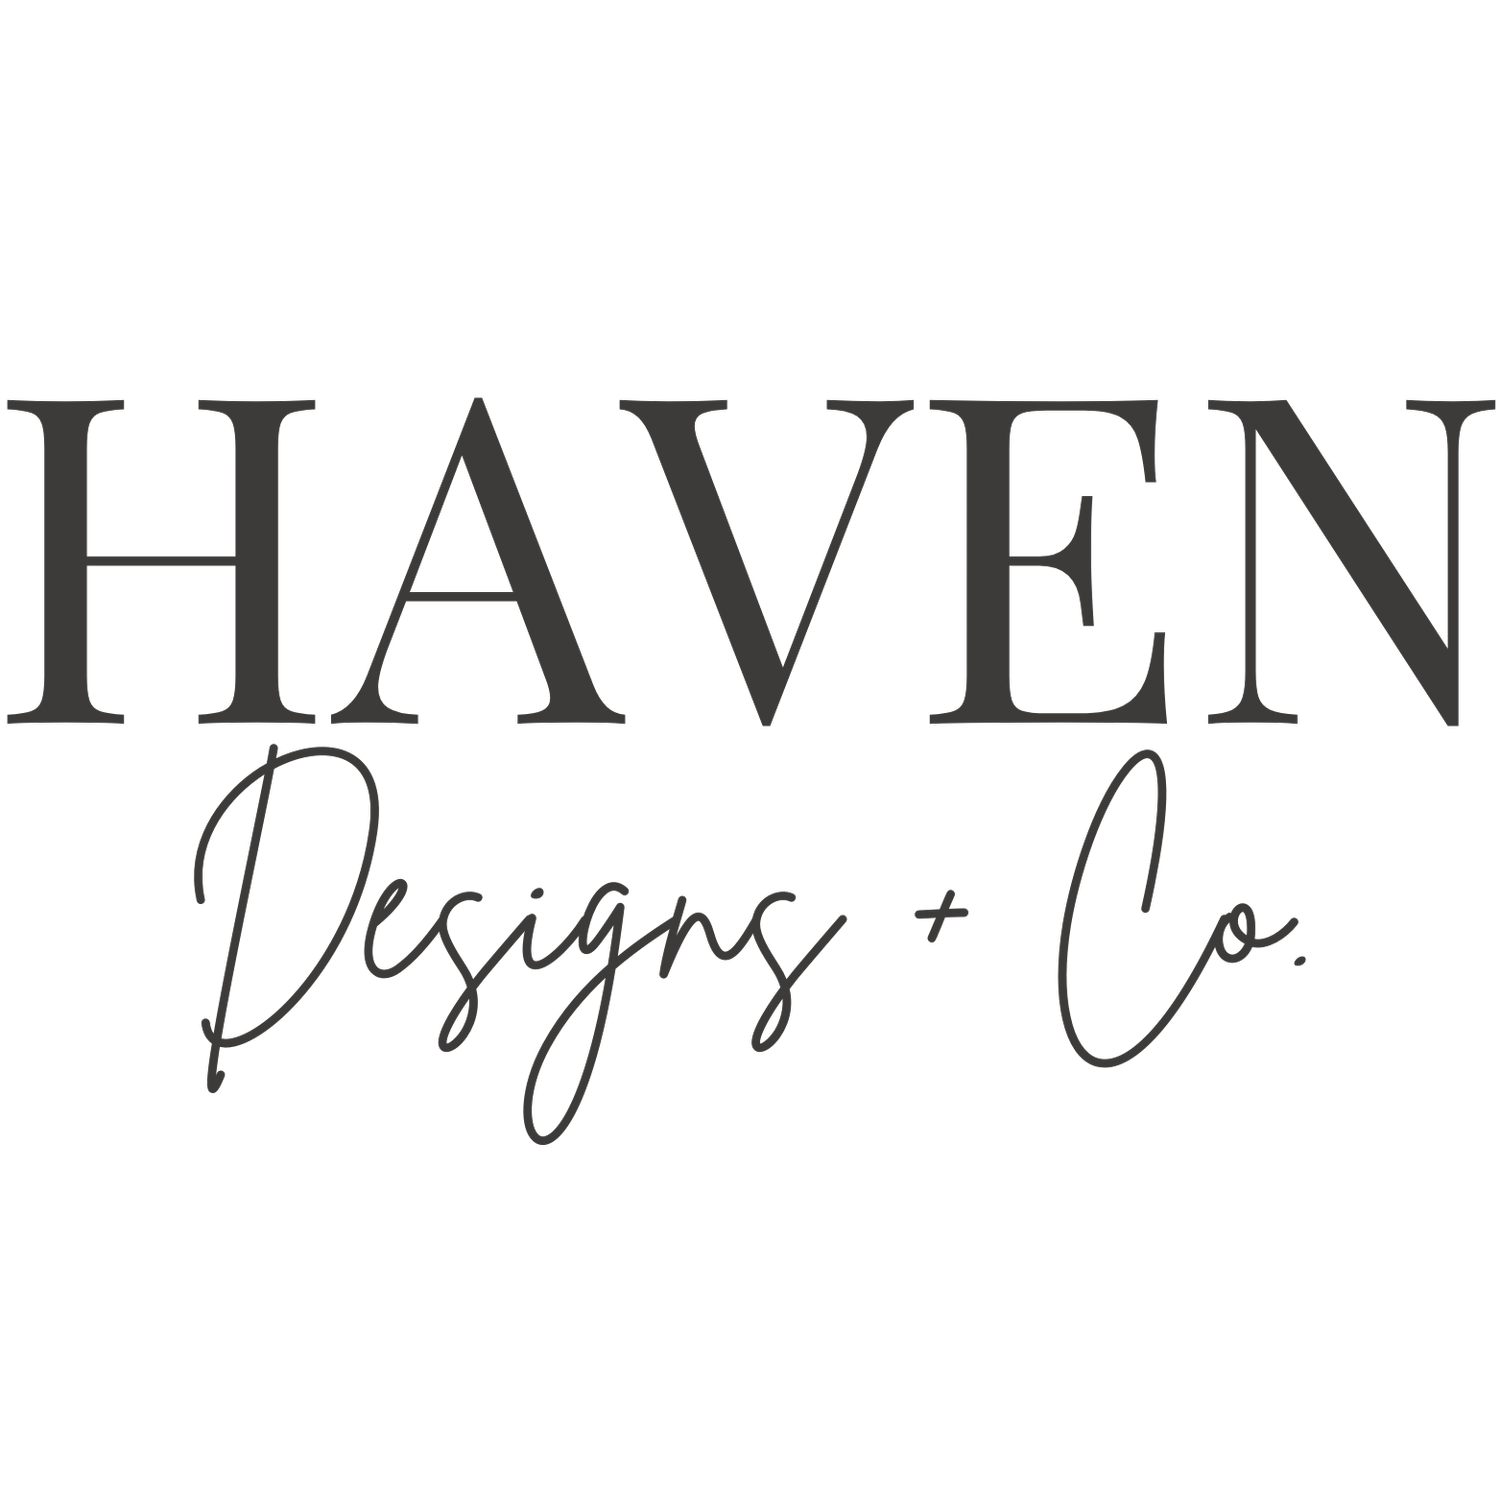 Haven Designs + Co.